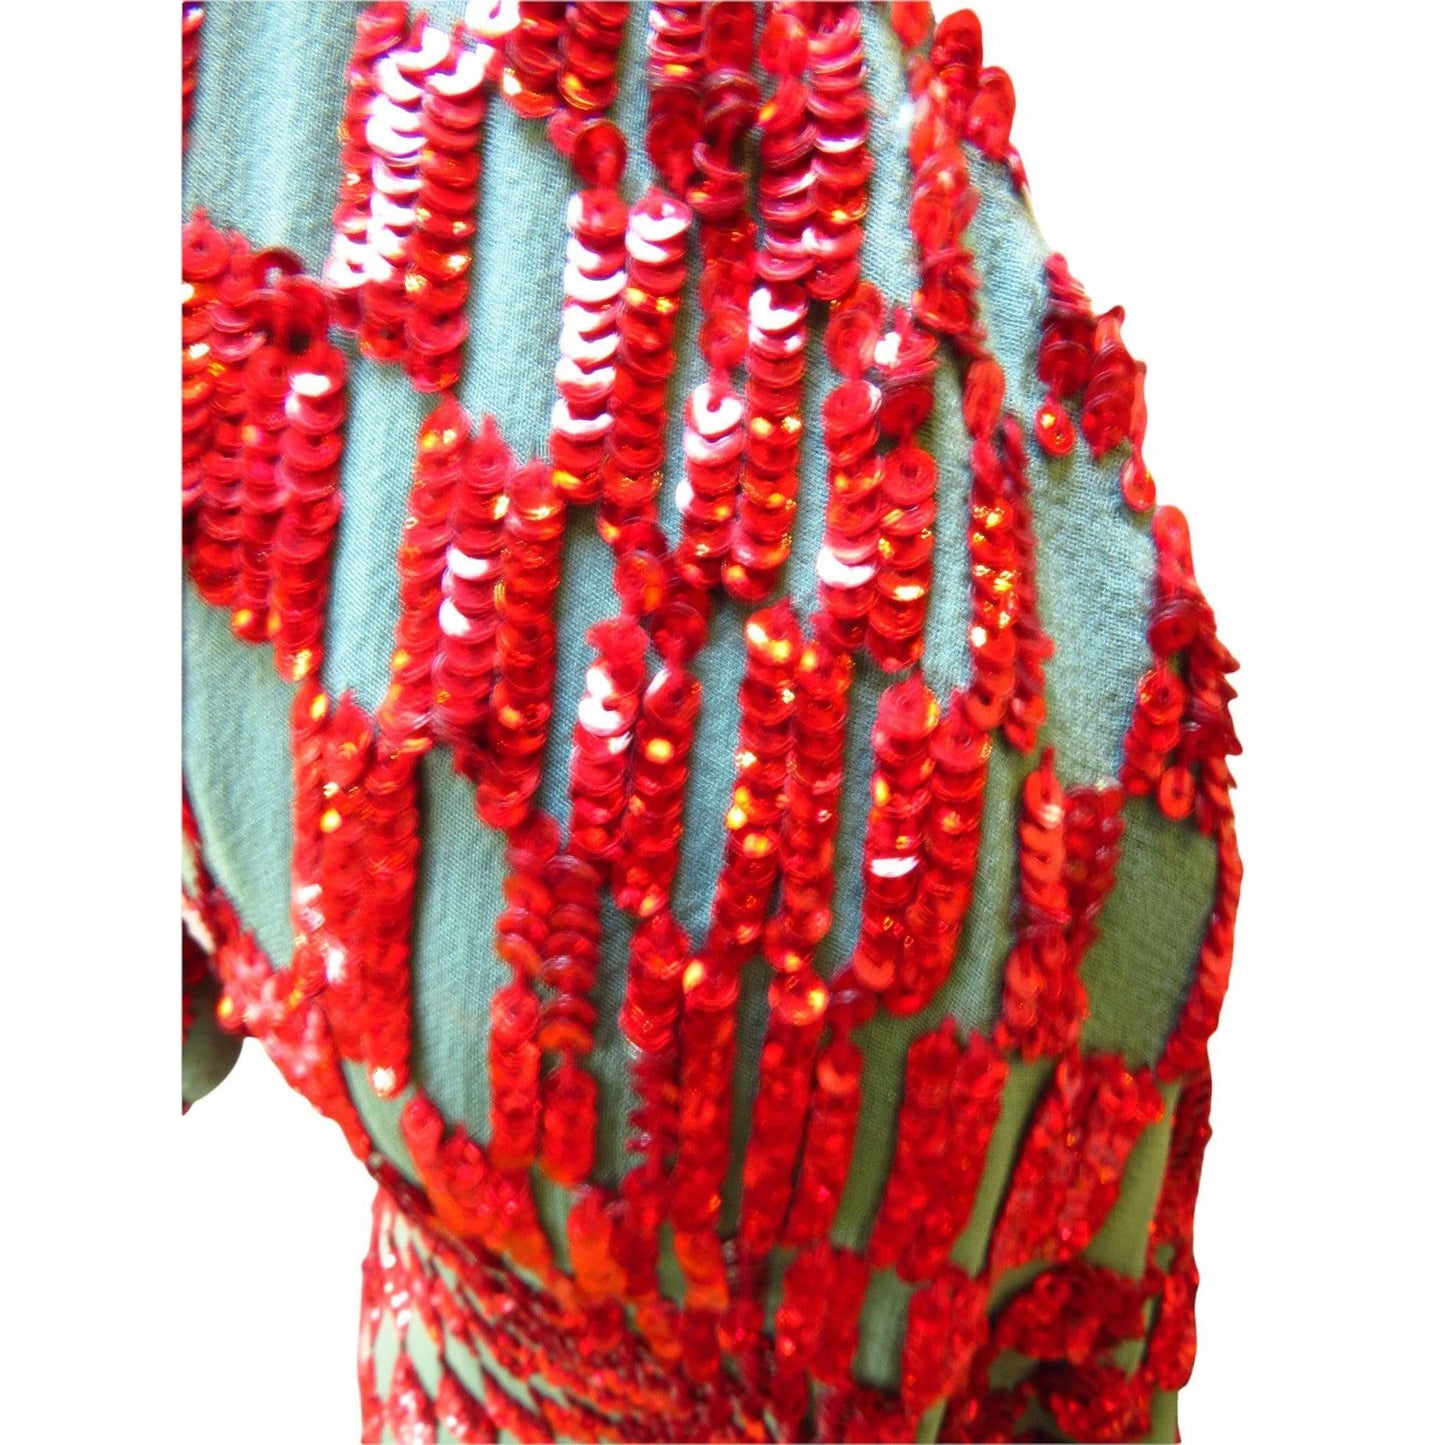 varun-sardana-red-sequin-harlequin-gown Dresses Firebrick